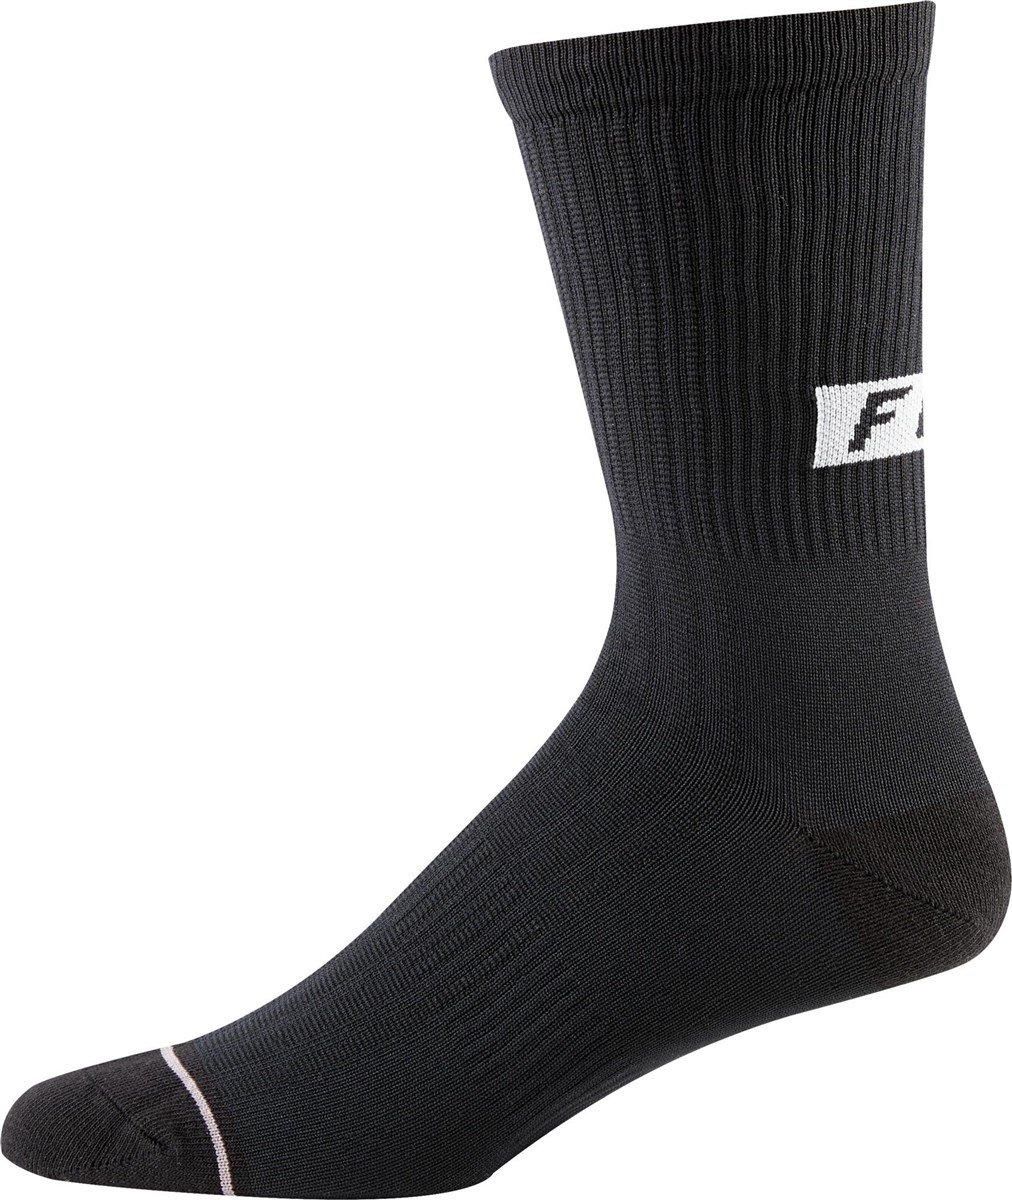 Fox Clothing 6" Trail Socks product image